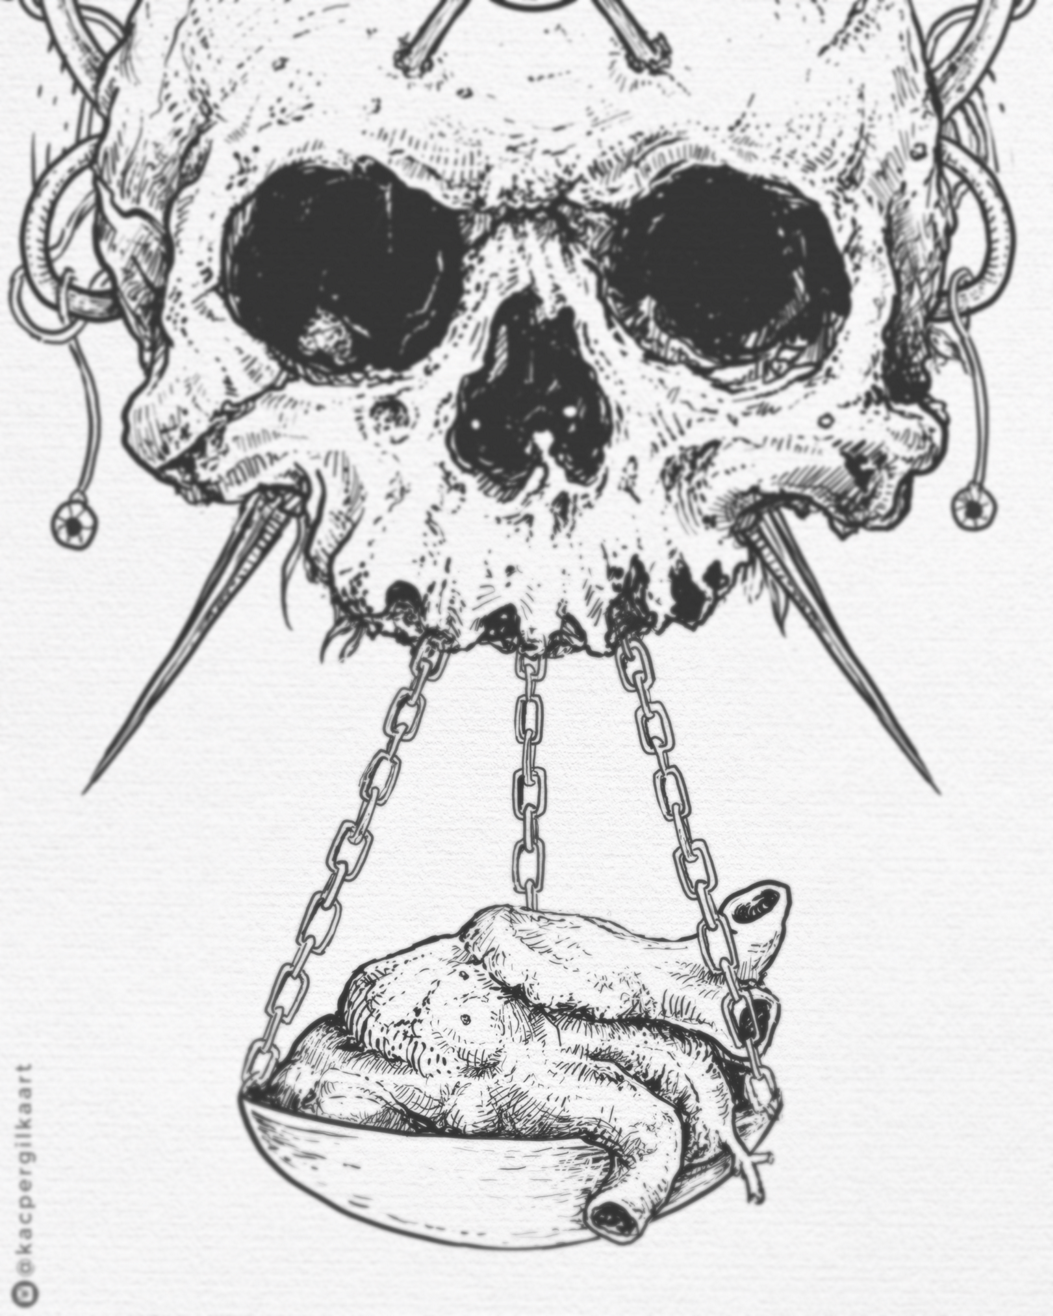 Tshirt Design skull surreal occult dark art symbolic metal band heavy art ornaments creepy